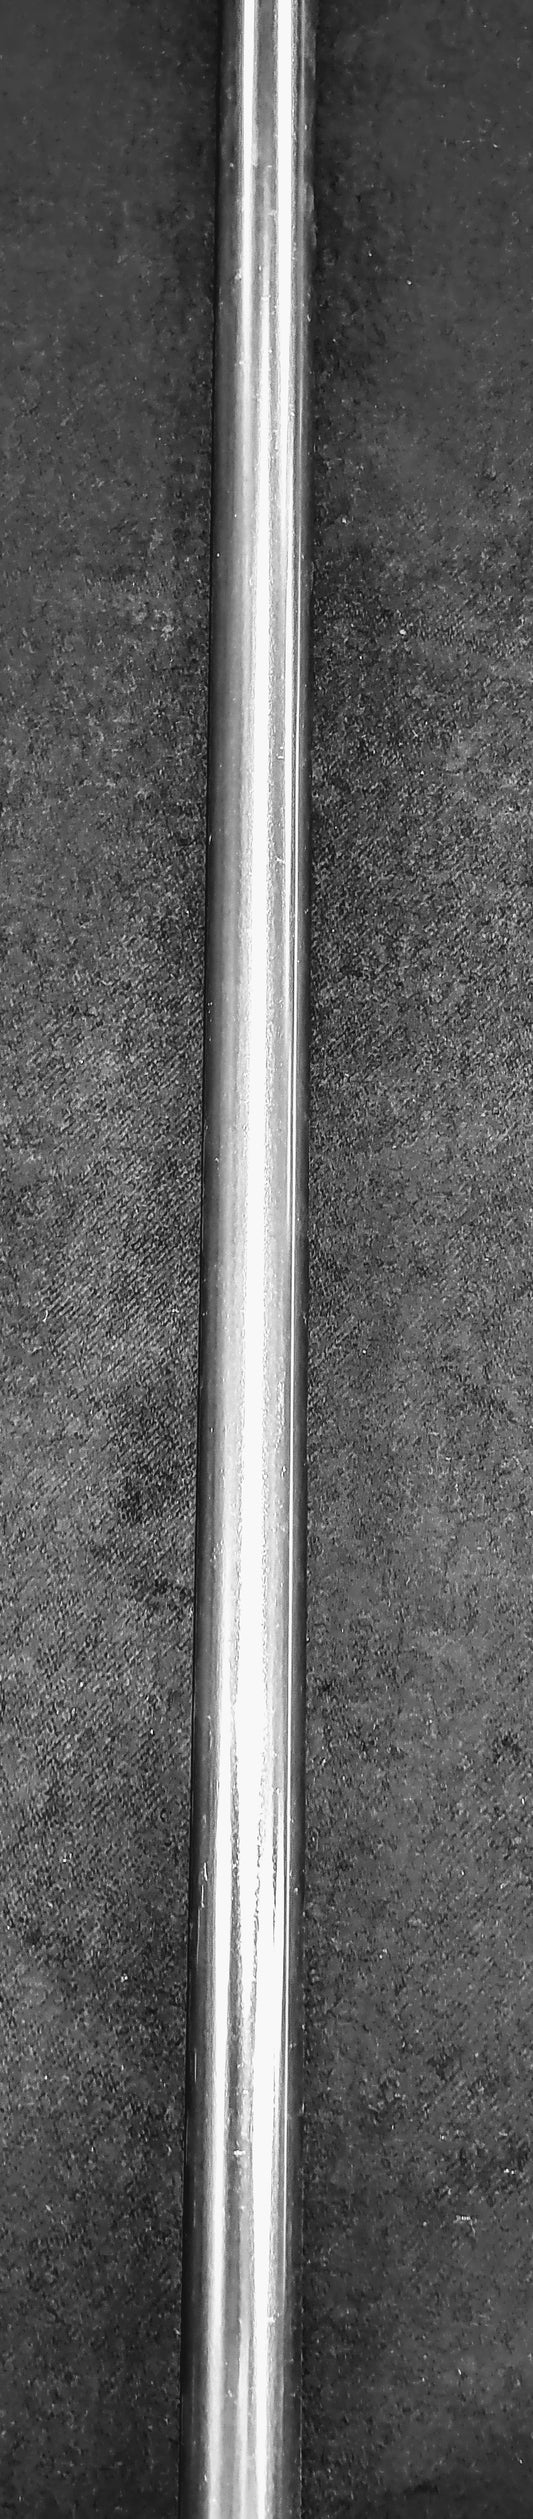 Aluminum Staff Tubing 5 foot lengths